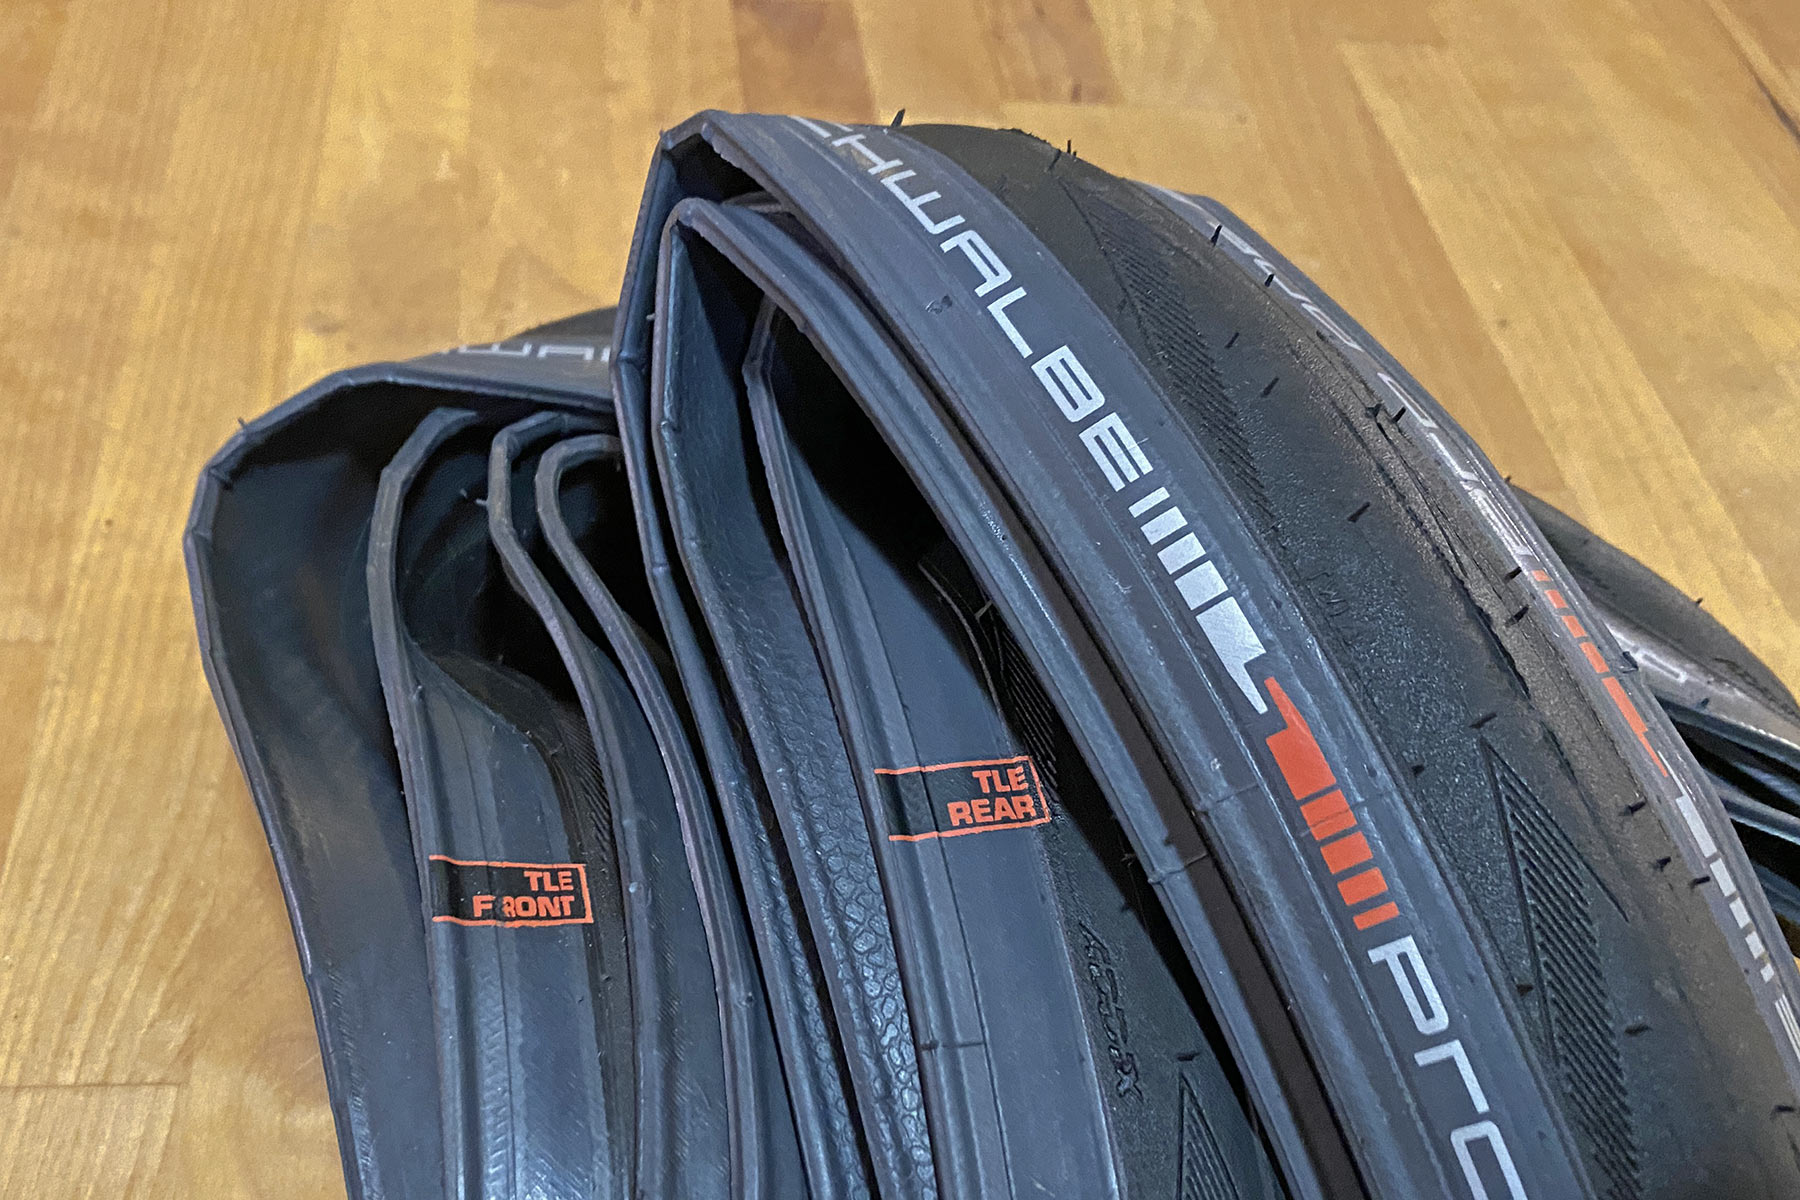 Schwalbe Pro One Aero front-specific & rear-specific aerodynamic racing TT road bike tires, folded pair